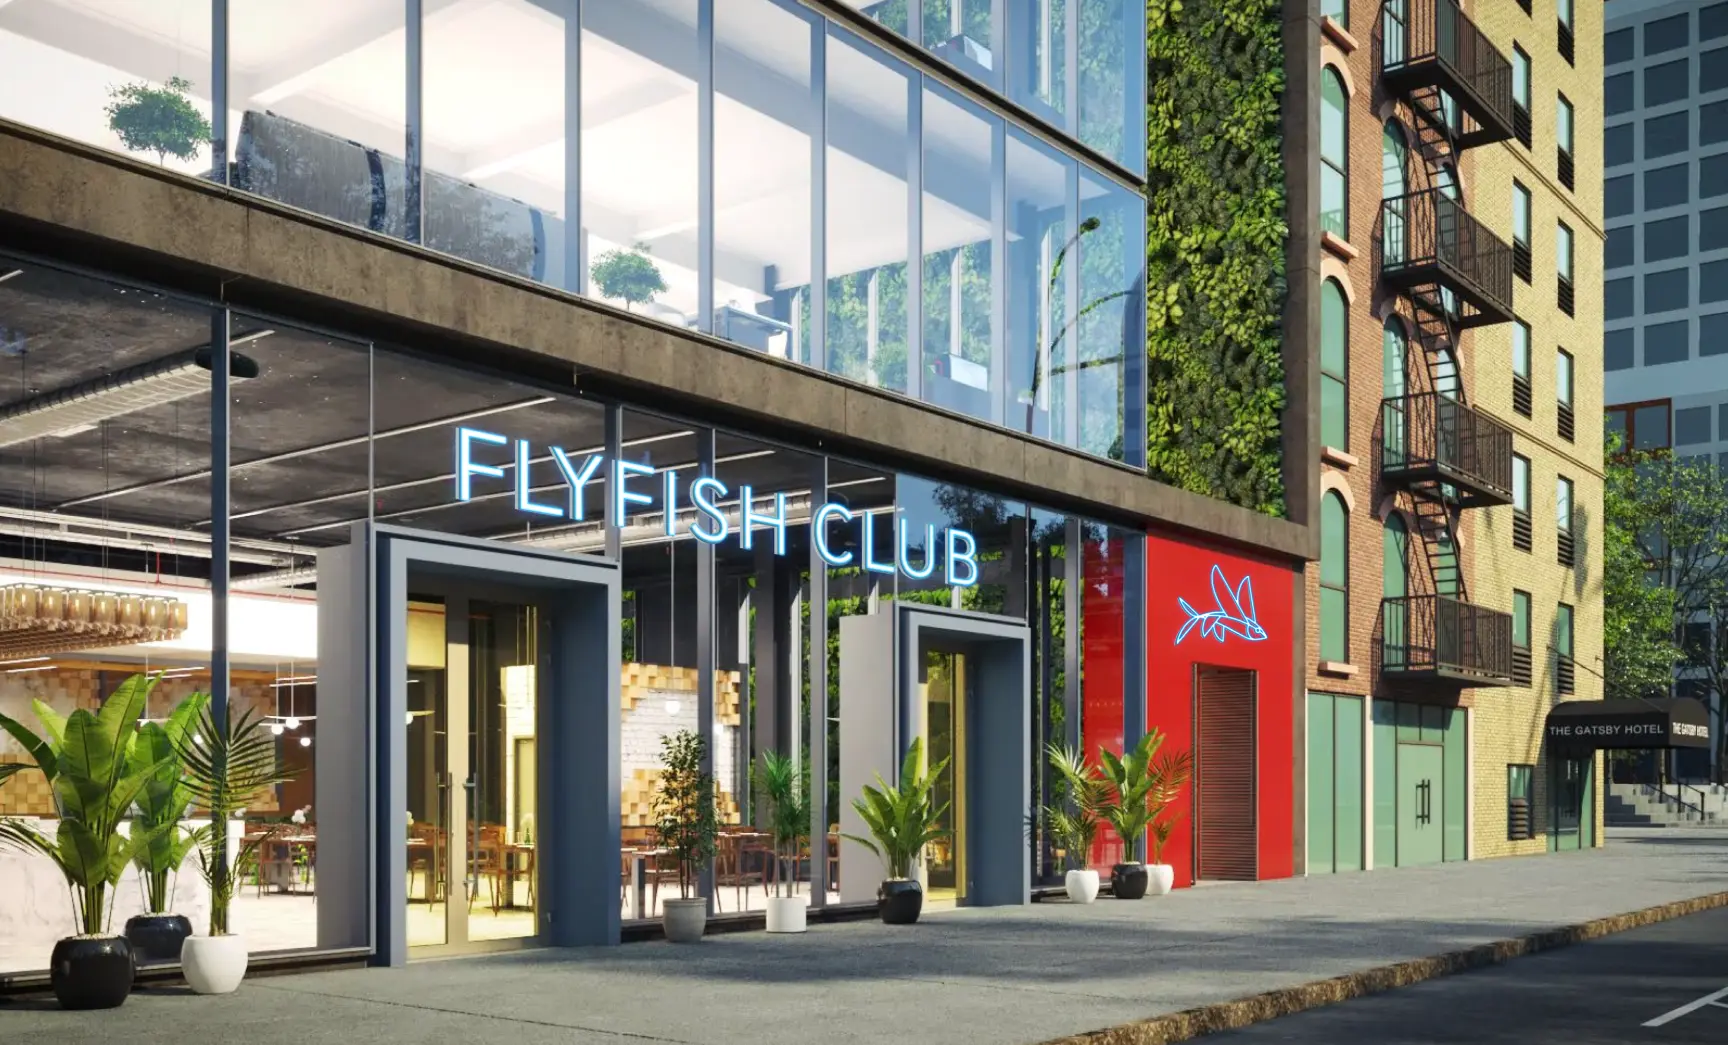 NFT Restaurant Flyfish Club Now Accepts Standard Memberships